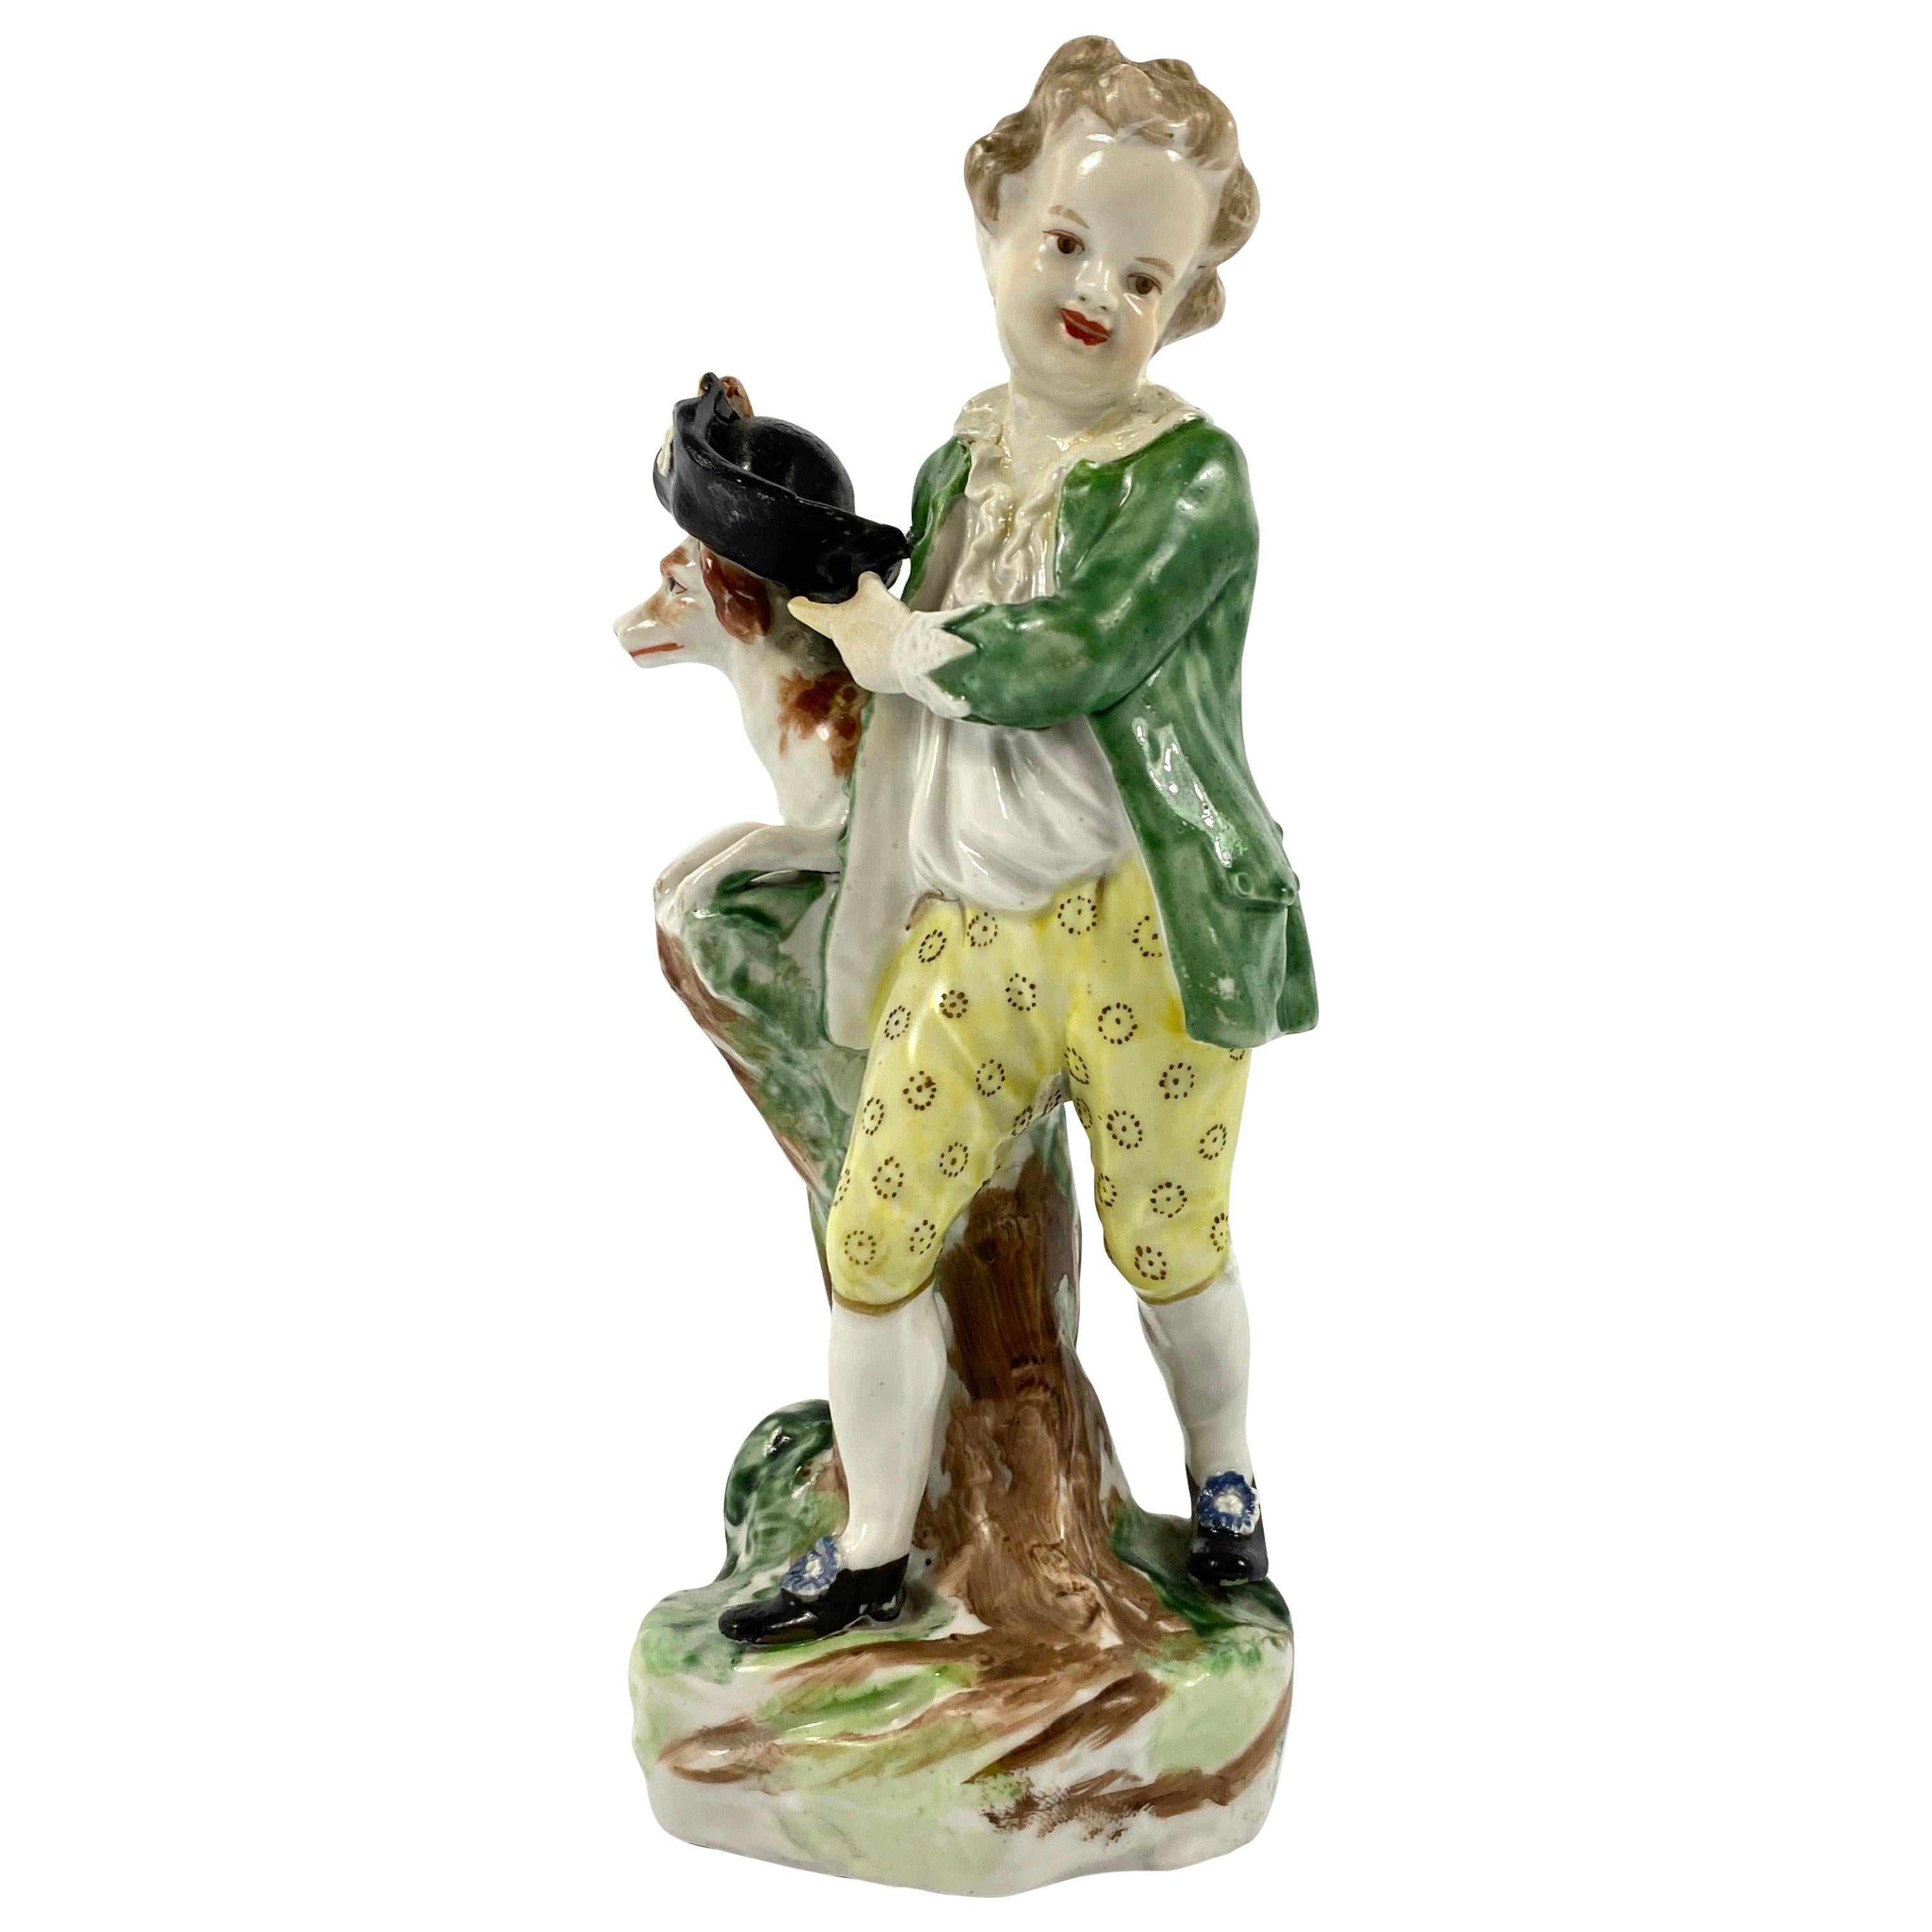 Bristol Porcelain Figure of a Boy, circa 1775